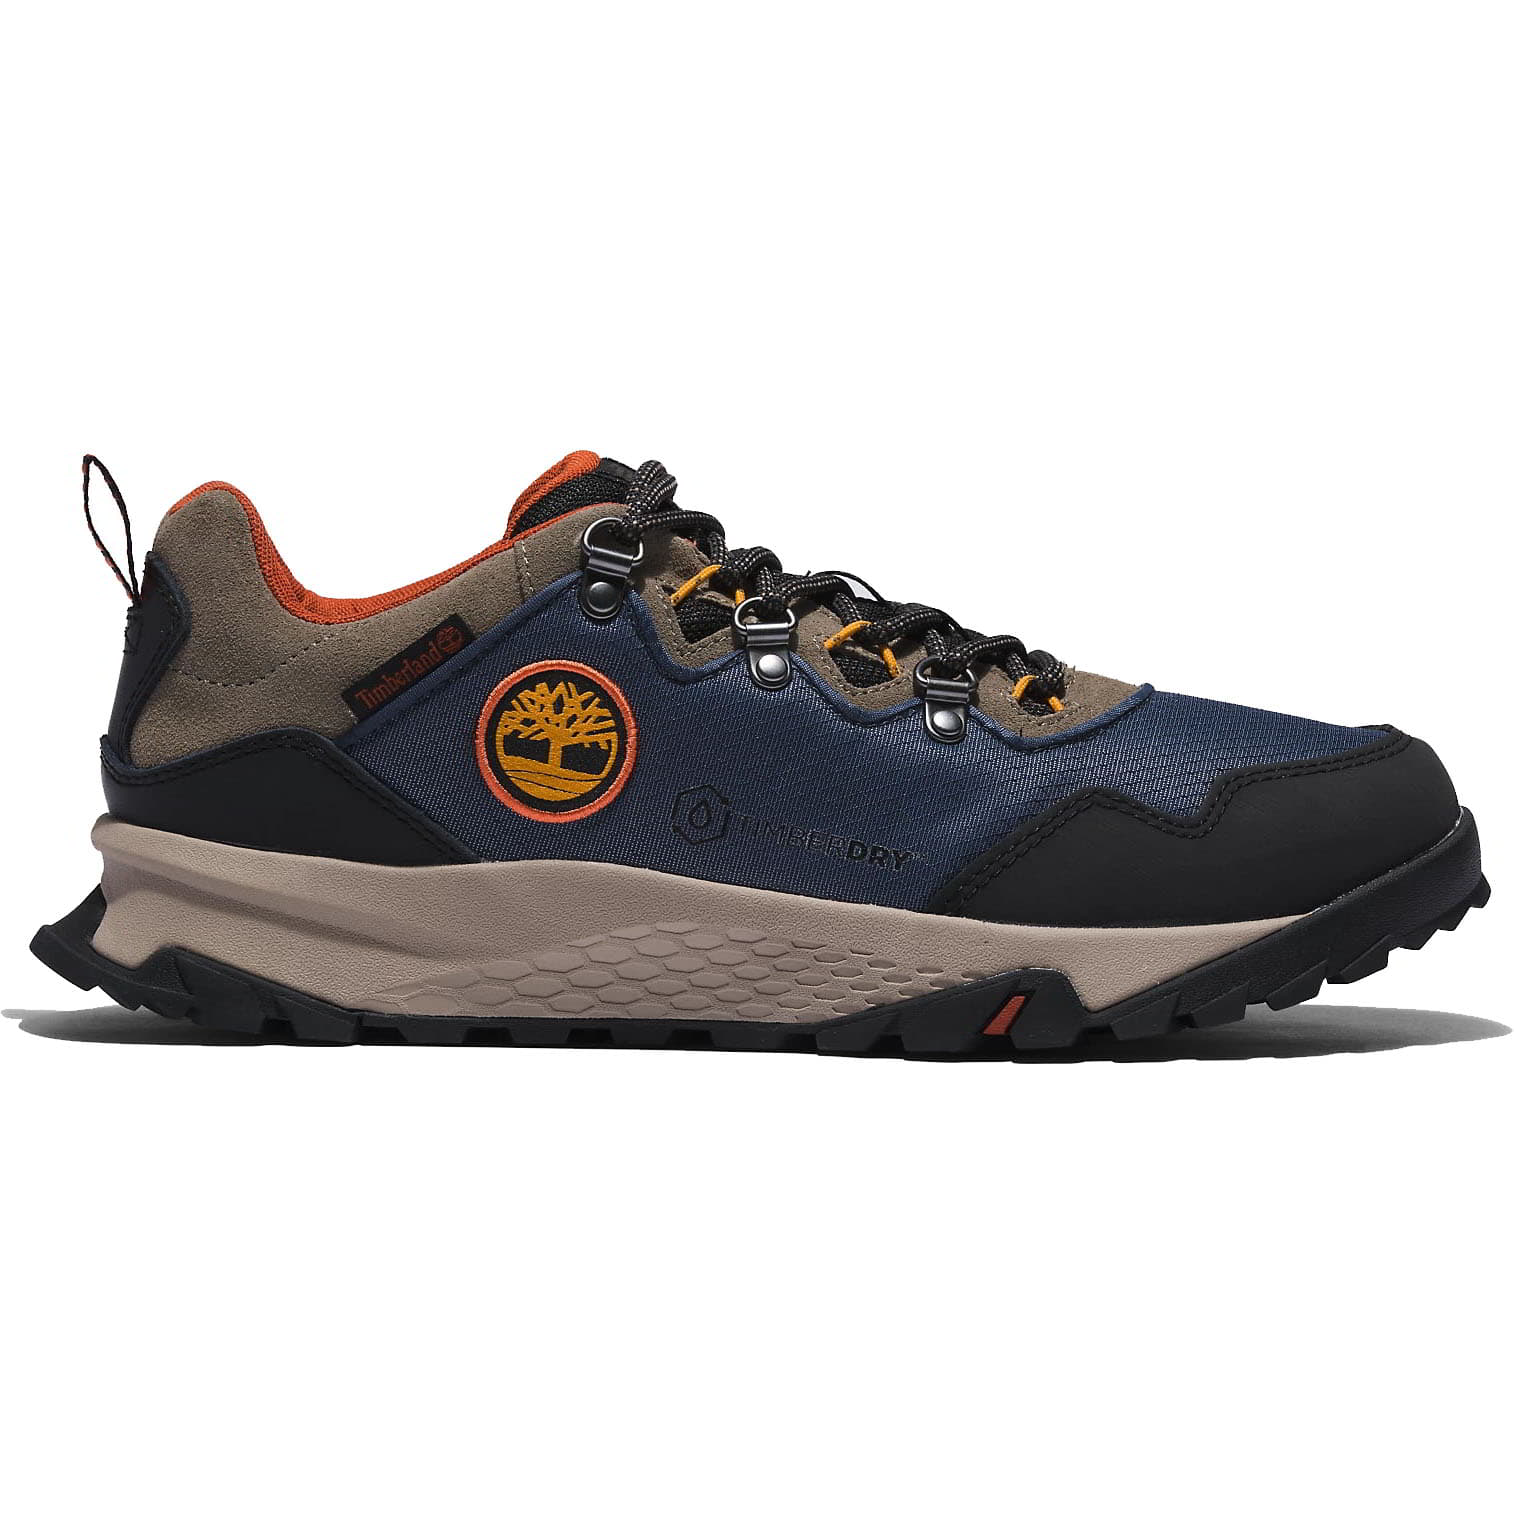 Timberland Mens A2DZZ Lincoln Peak Low Waterproof Walking Hiking Shoes - UK 11 Blue 2951